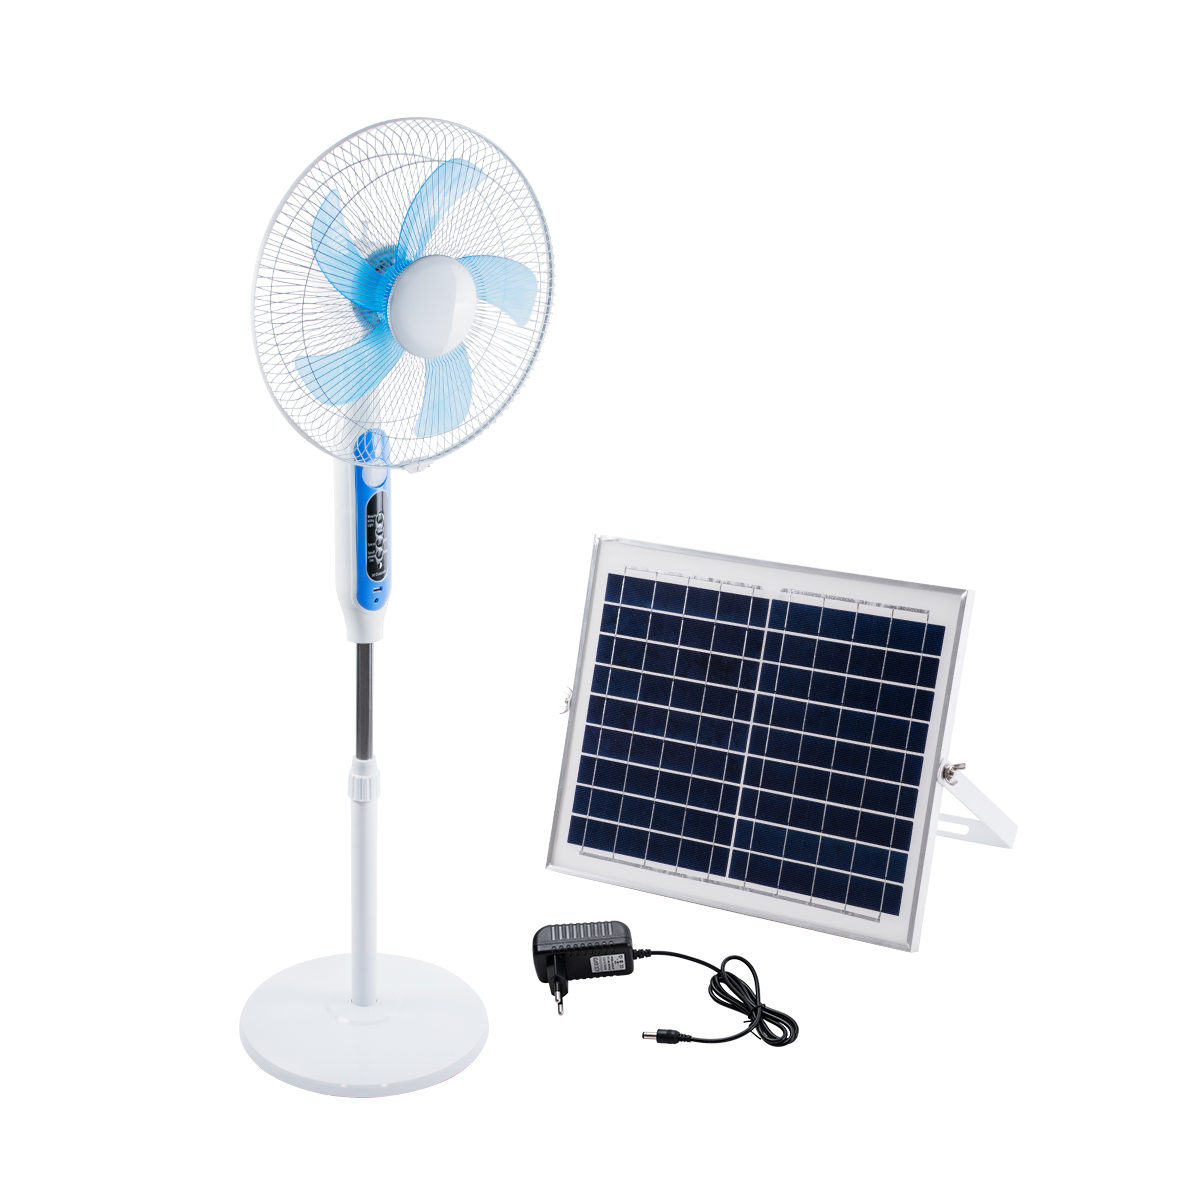 GloboStar® SOLARE-FAN 85357 Solar Fan Αυτόνομος Ηλιακός Επιδαπέδιος Ανεμιστήρας 25W 2 Λειτουργιών Ρεύματος με AC 220-240V ή με Φωτοβολταϊκό Panel 9V 15W & Επαναφορτιζόμενη Μπαταρία Li-ion 7.4V 6000mAh – 12 Ταχύτητες – Ασύρματο Χειριστήριο – Ενσωματωμένο USB 2.0 Charger Συσκευών – IP20 – Μ44 x Π37.5 x Υ132cm – Λευκό – 2 Years Warranty